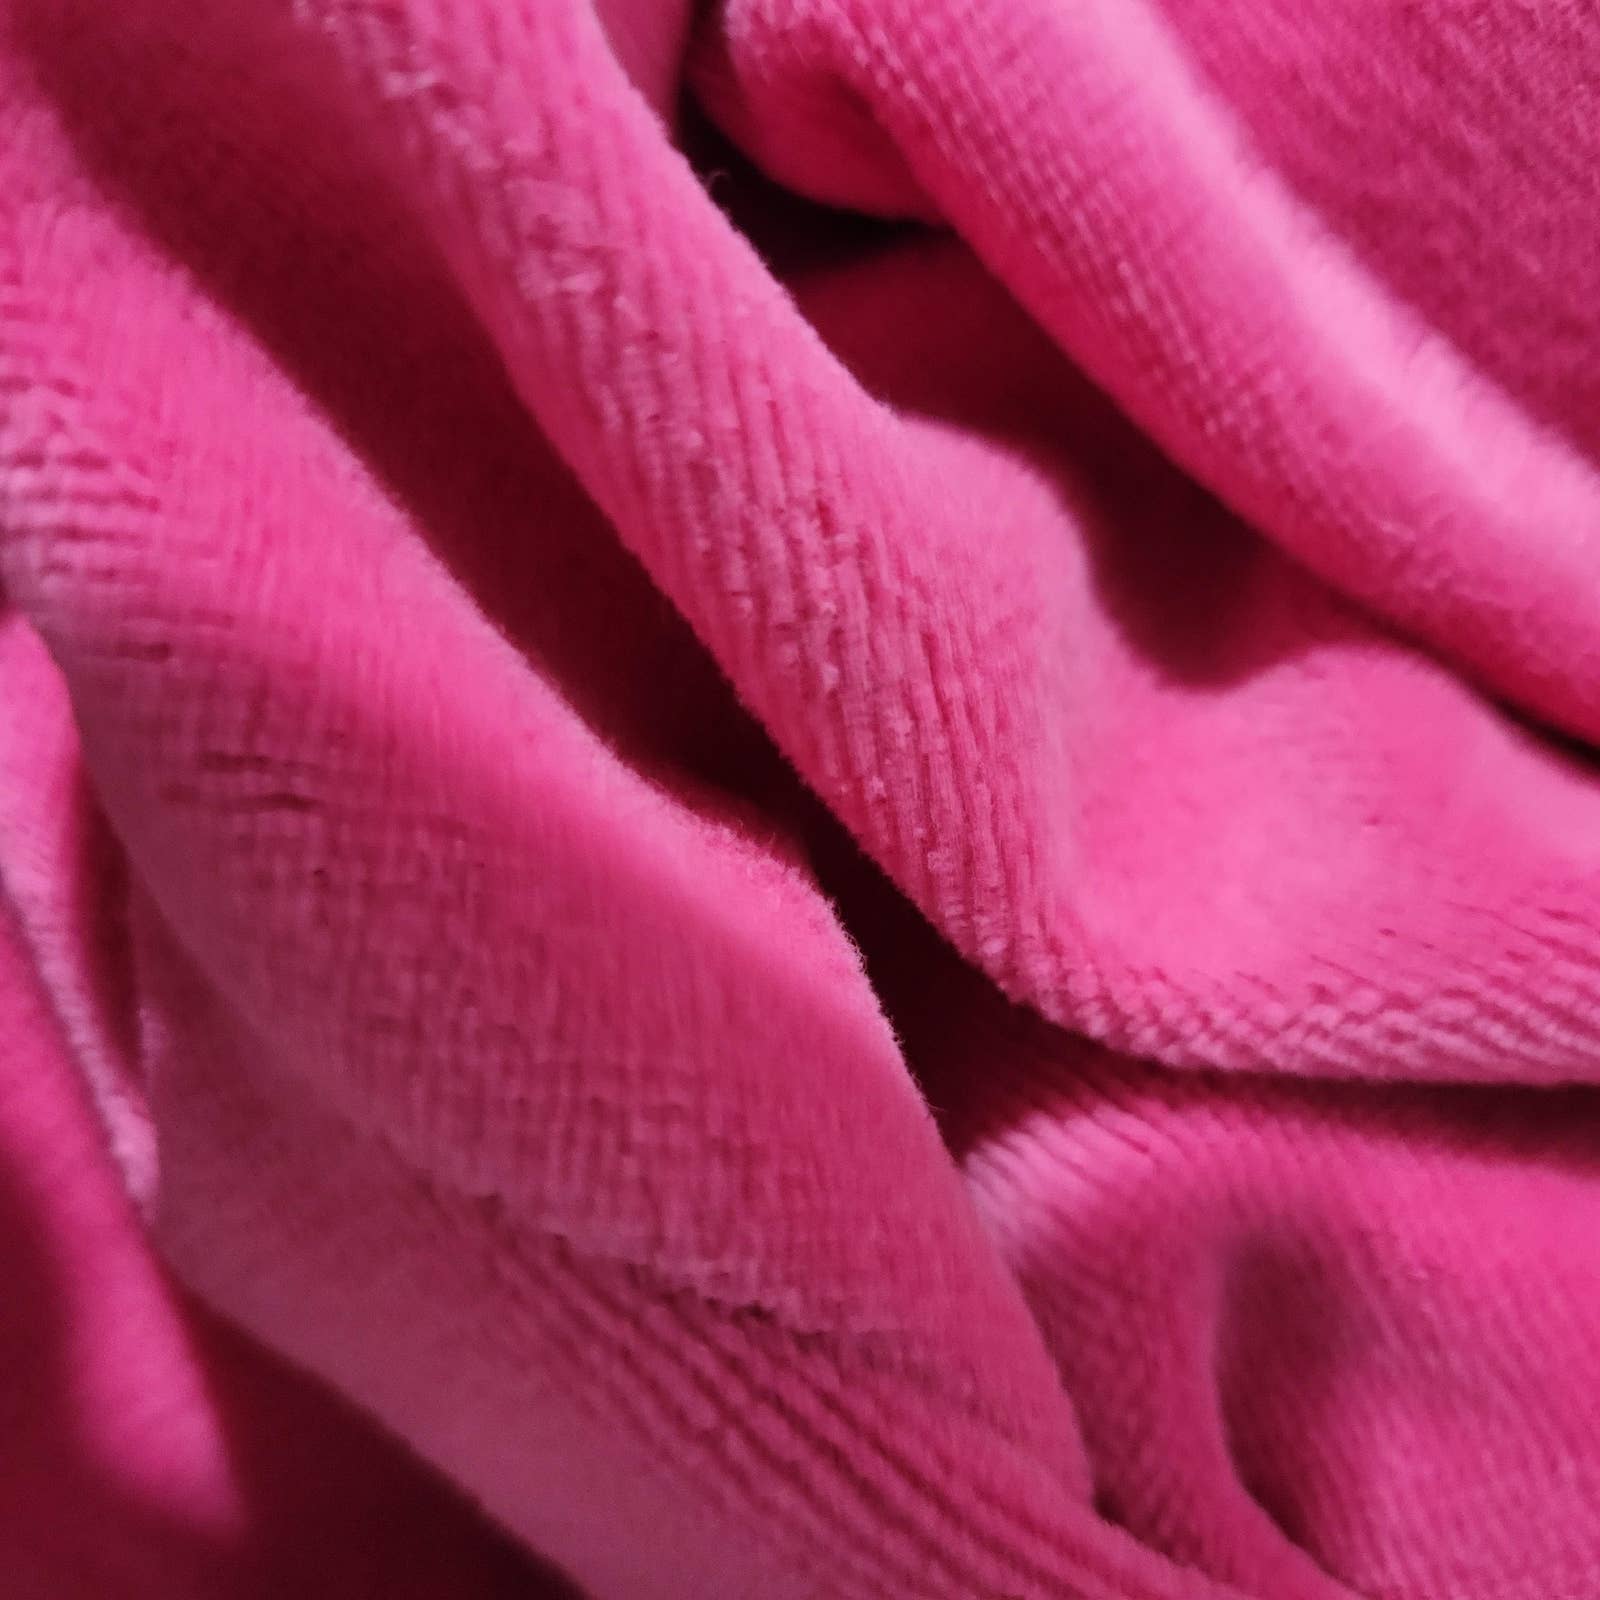 Juicy Couture Zuma Pants Pink Velour Jogger Varsity Low Rise Yoga Loungewear Size Medium